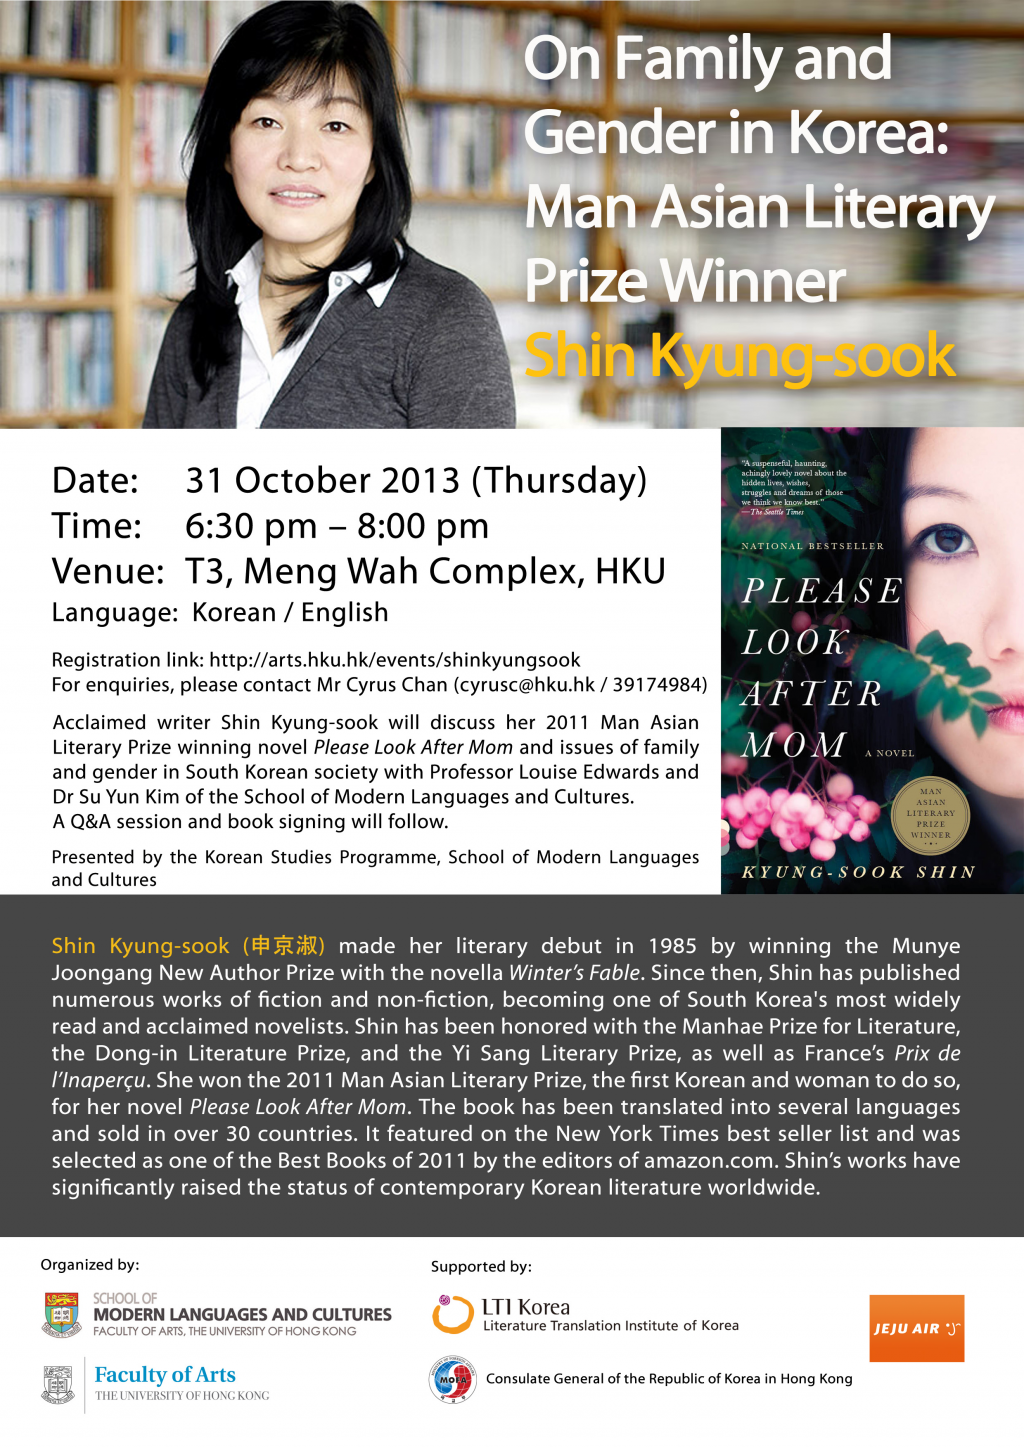 On Family and Gender in Korea: Man Asian Literary Prize Winner Shin Kyung-sook 